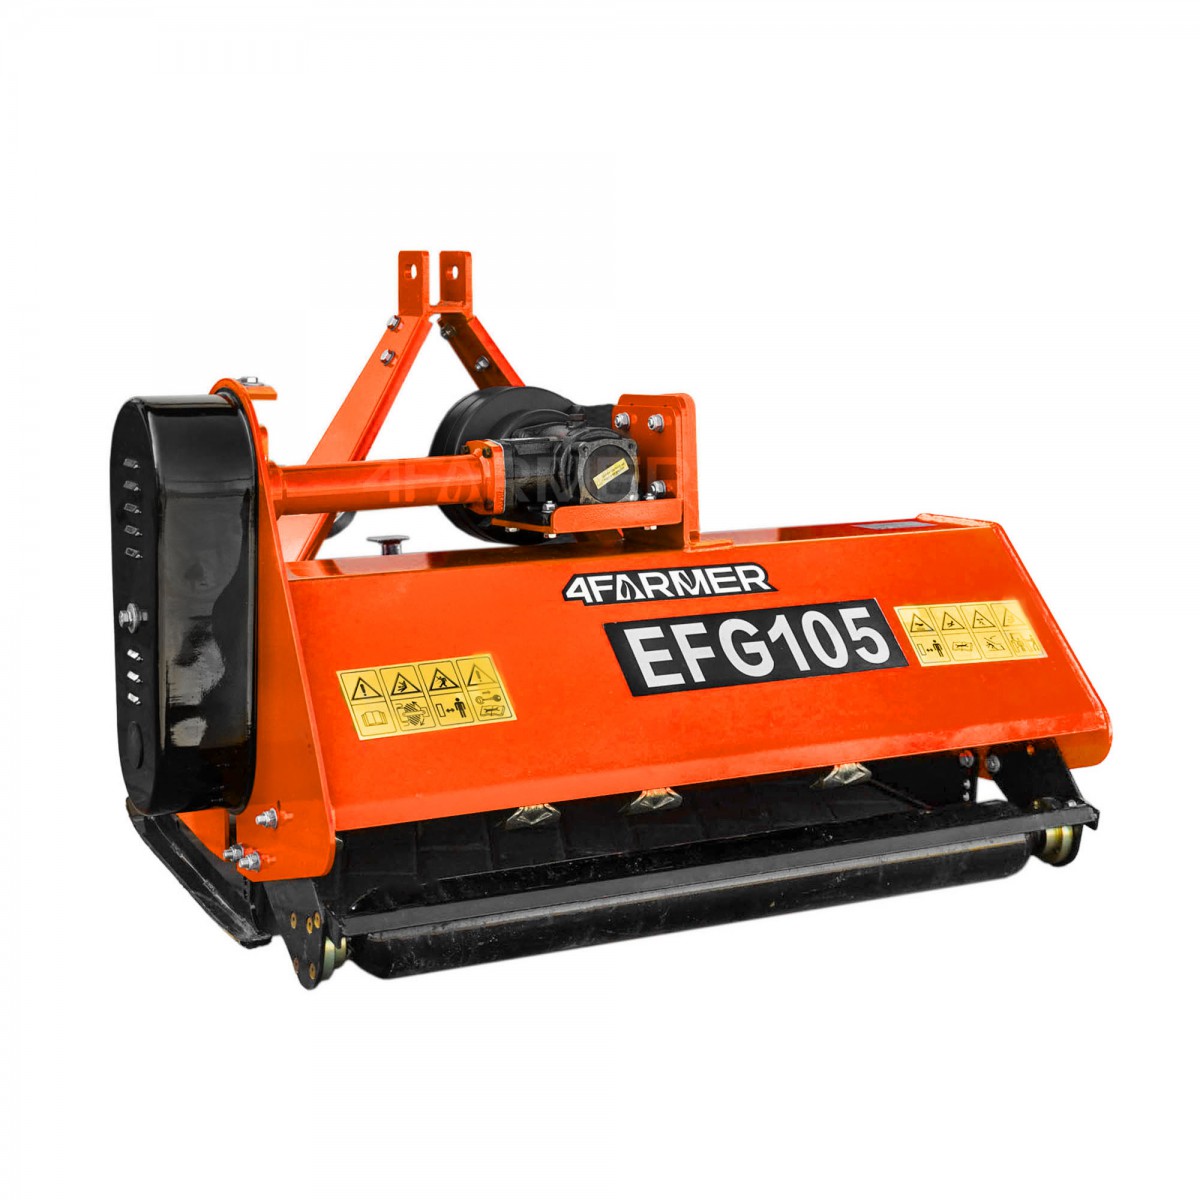 EFG 105 4FARMER flail mower - orange